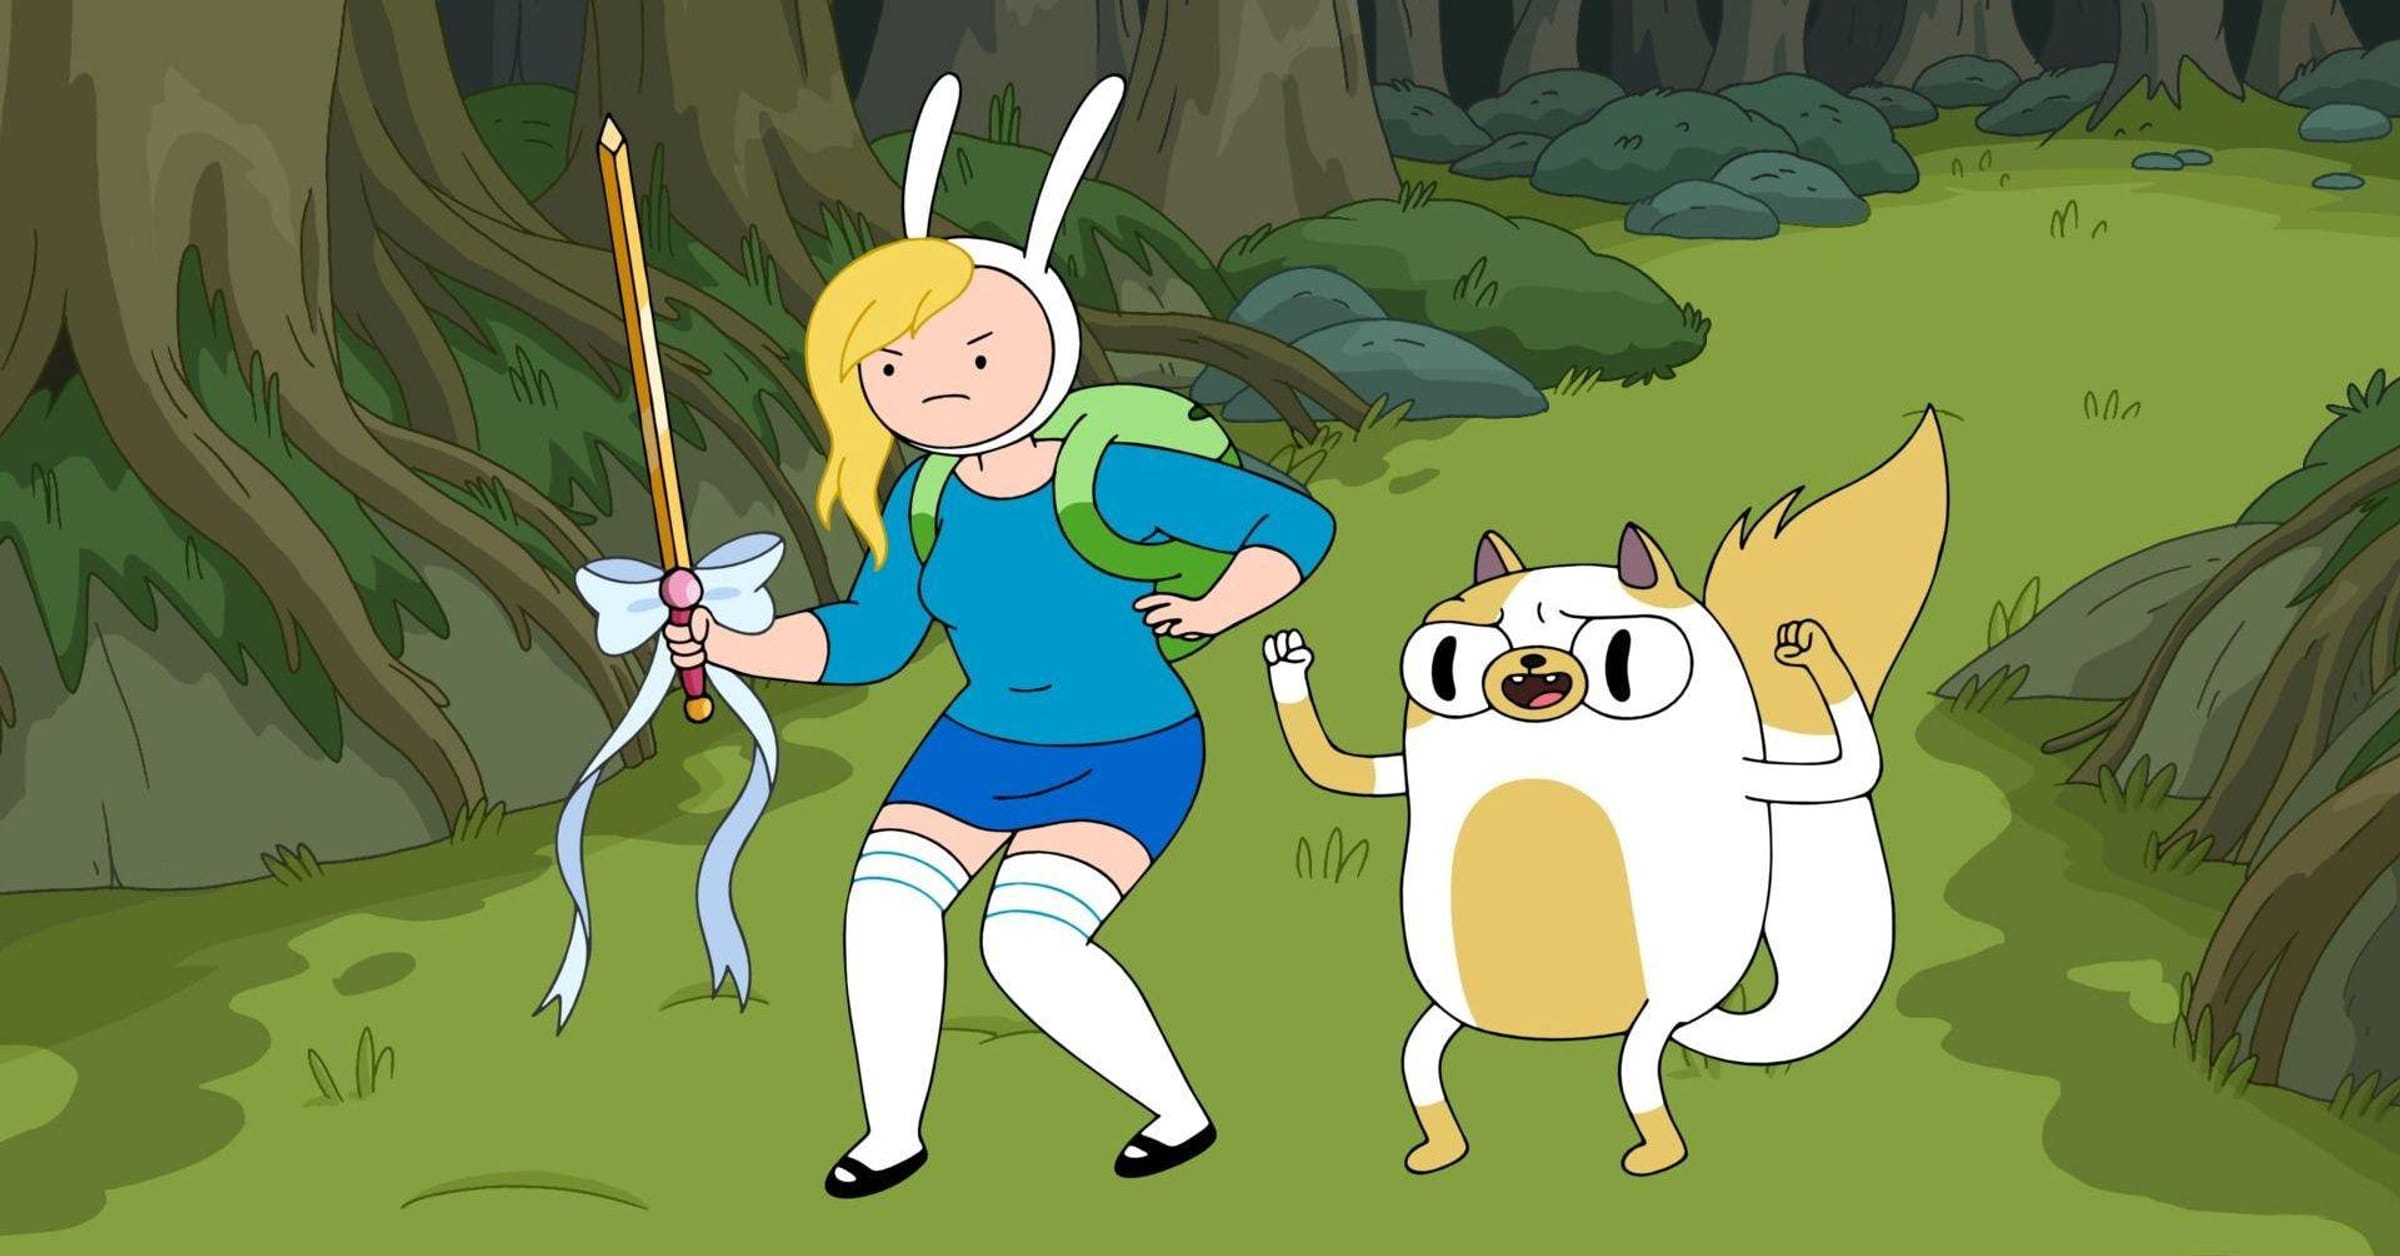 Fionna and Cake  Adventure time anime, Adventure time, Adventure